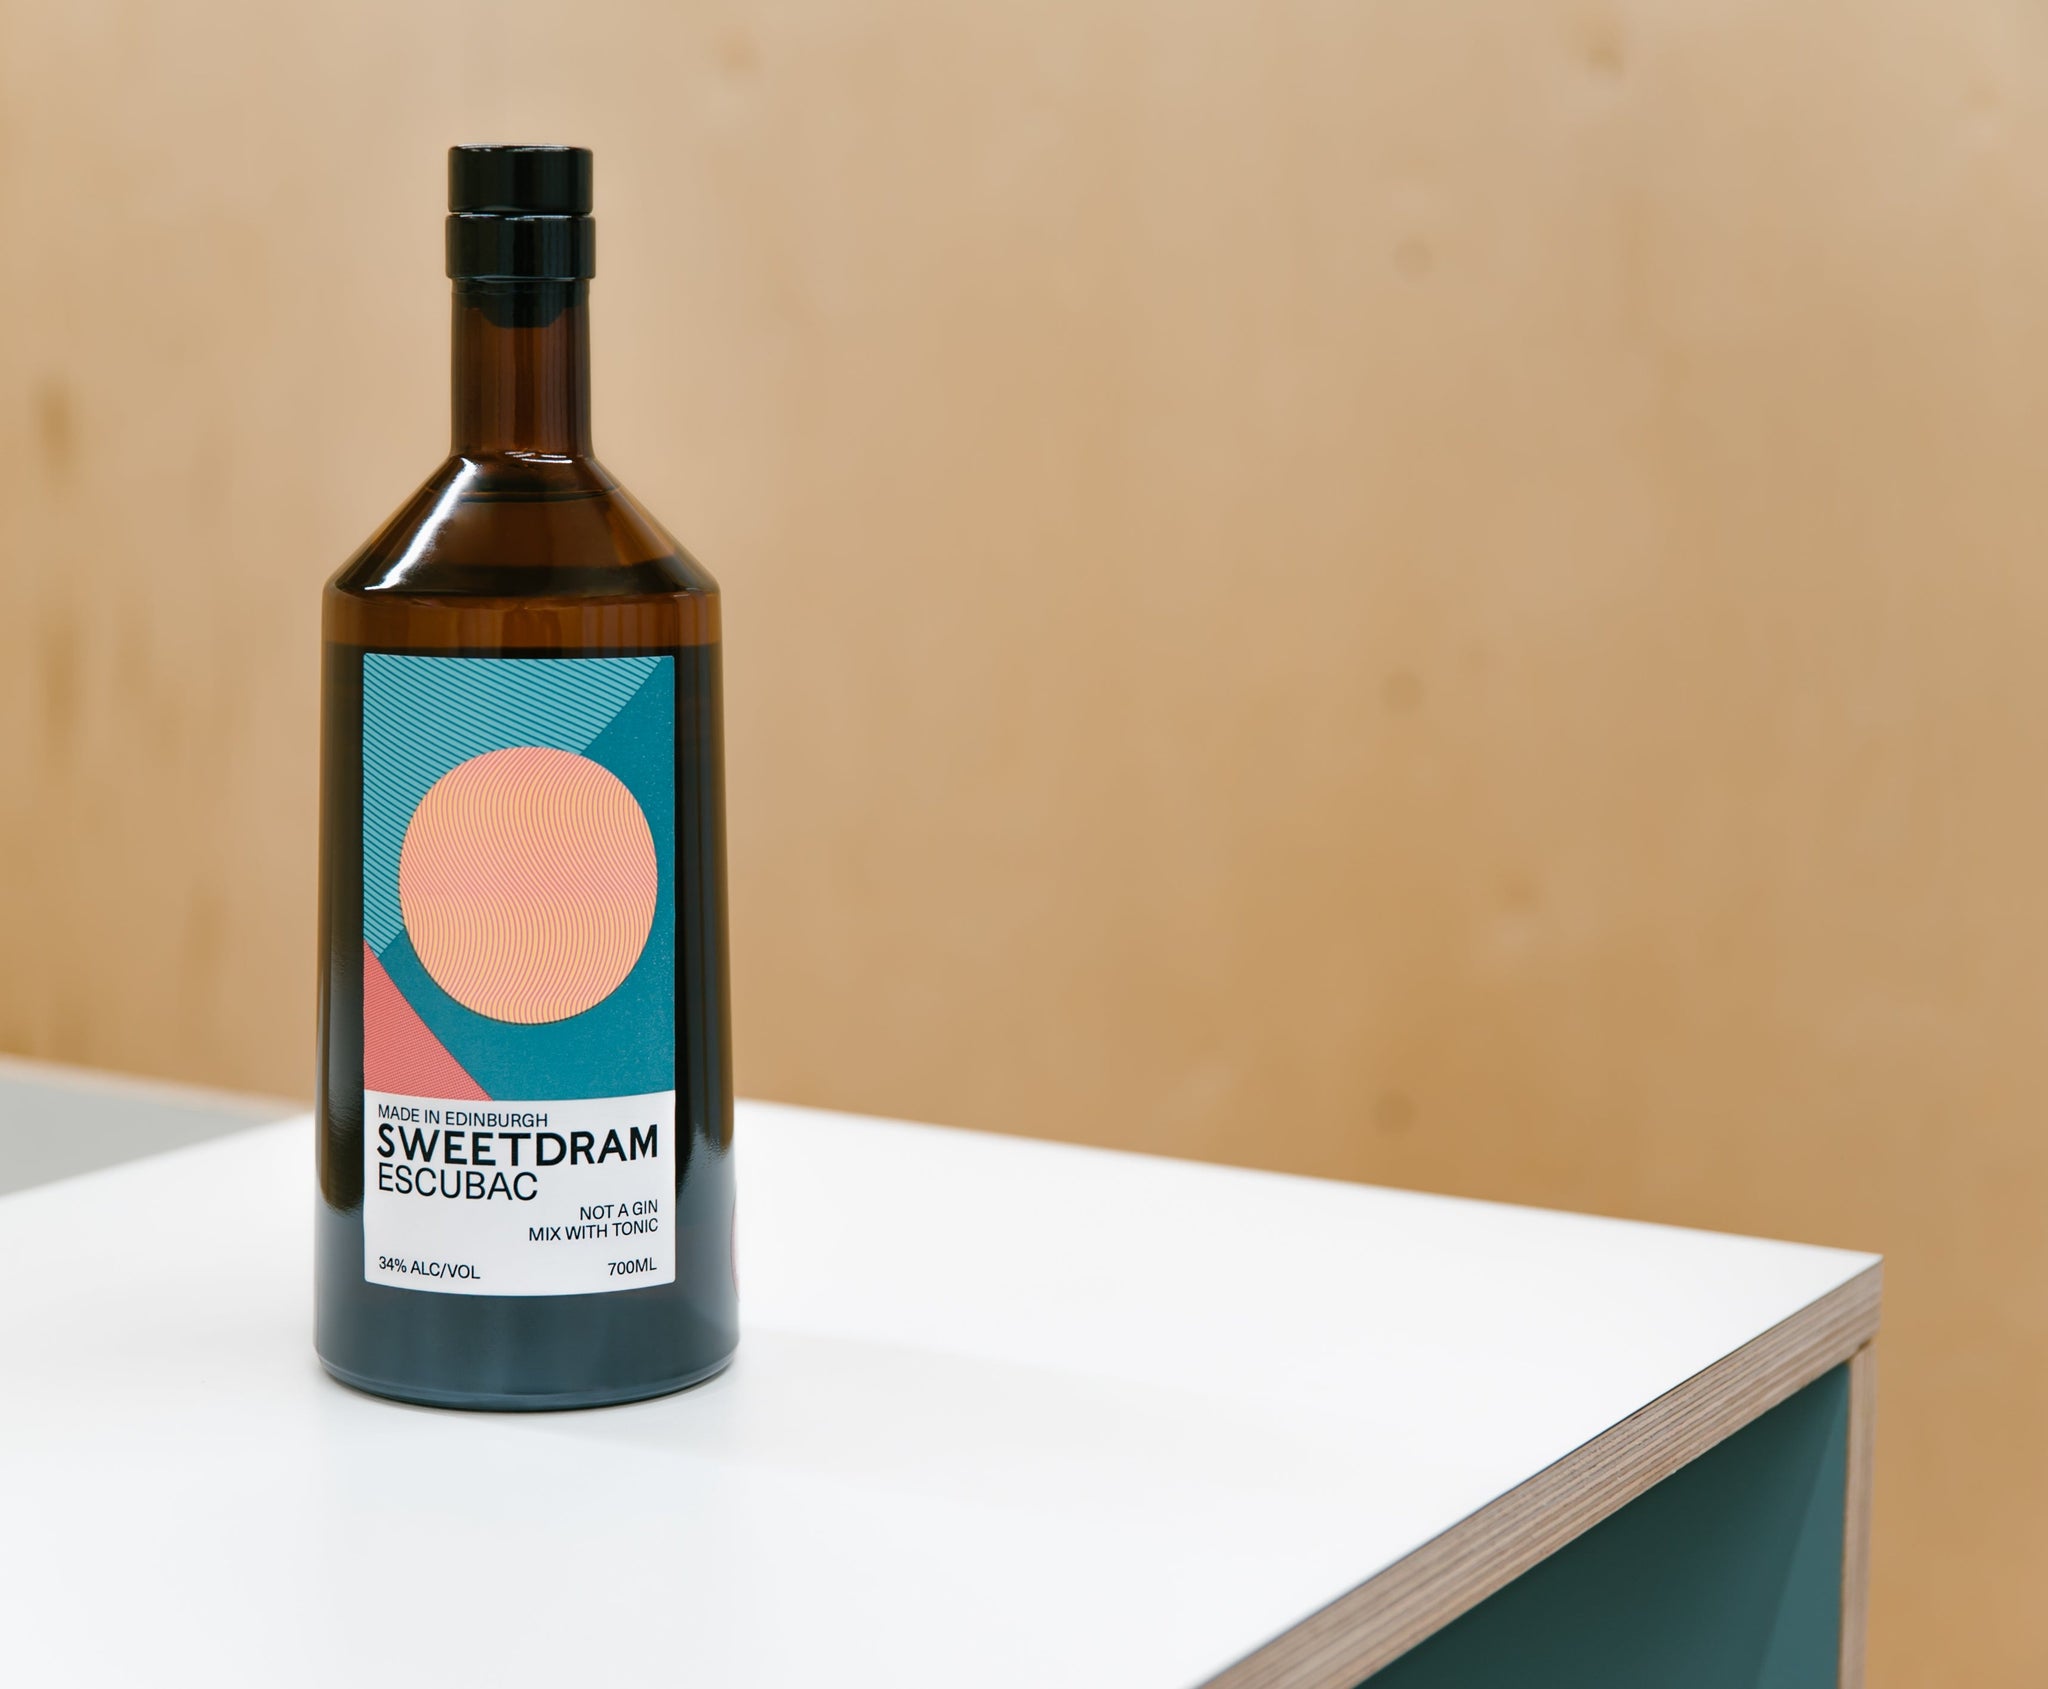 Bottle of Sweetdram Escubac on white table in Sweetdram bar area.